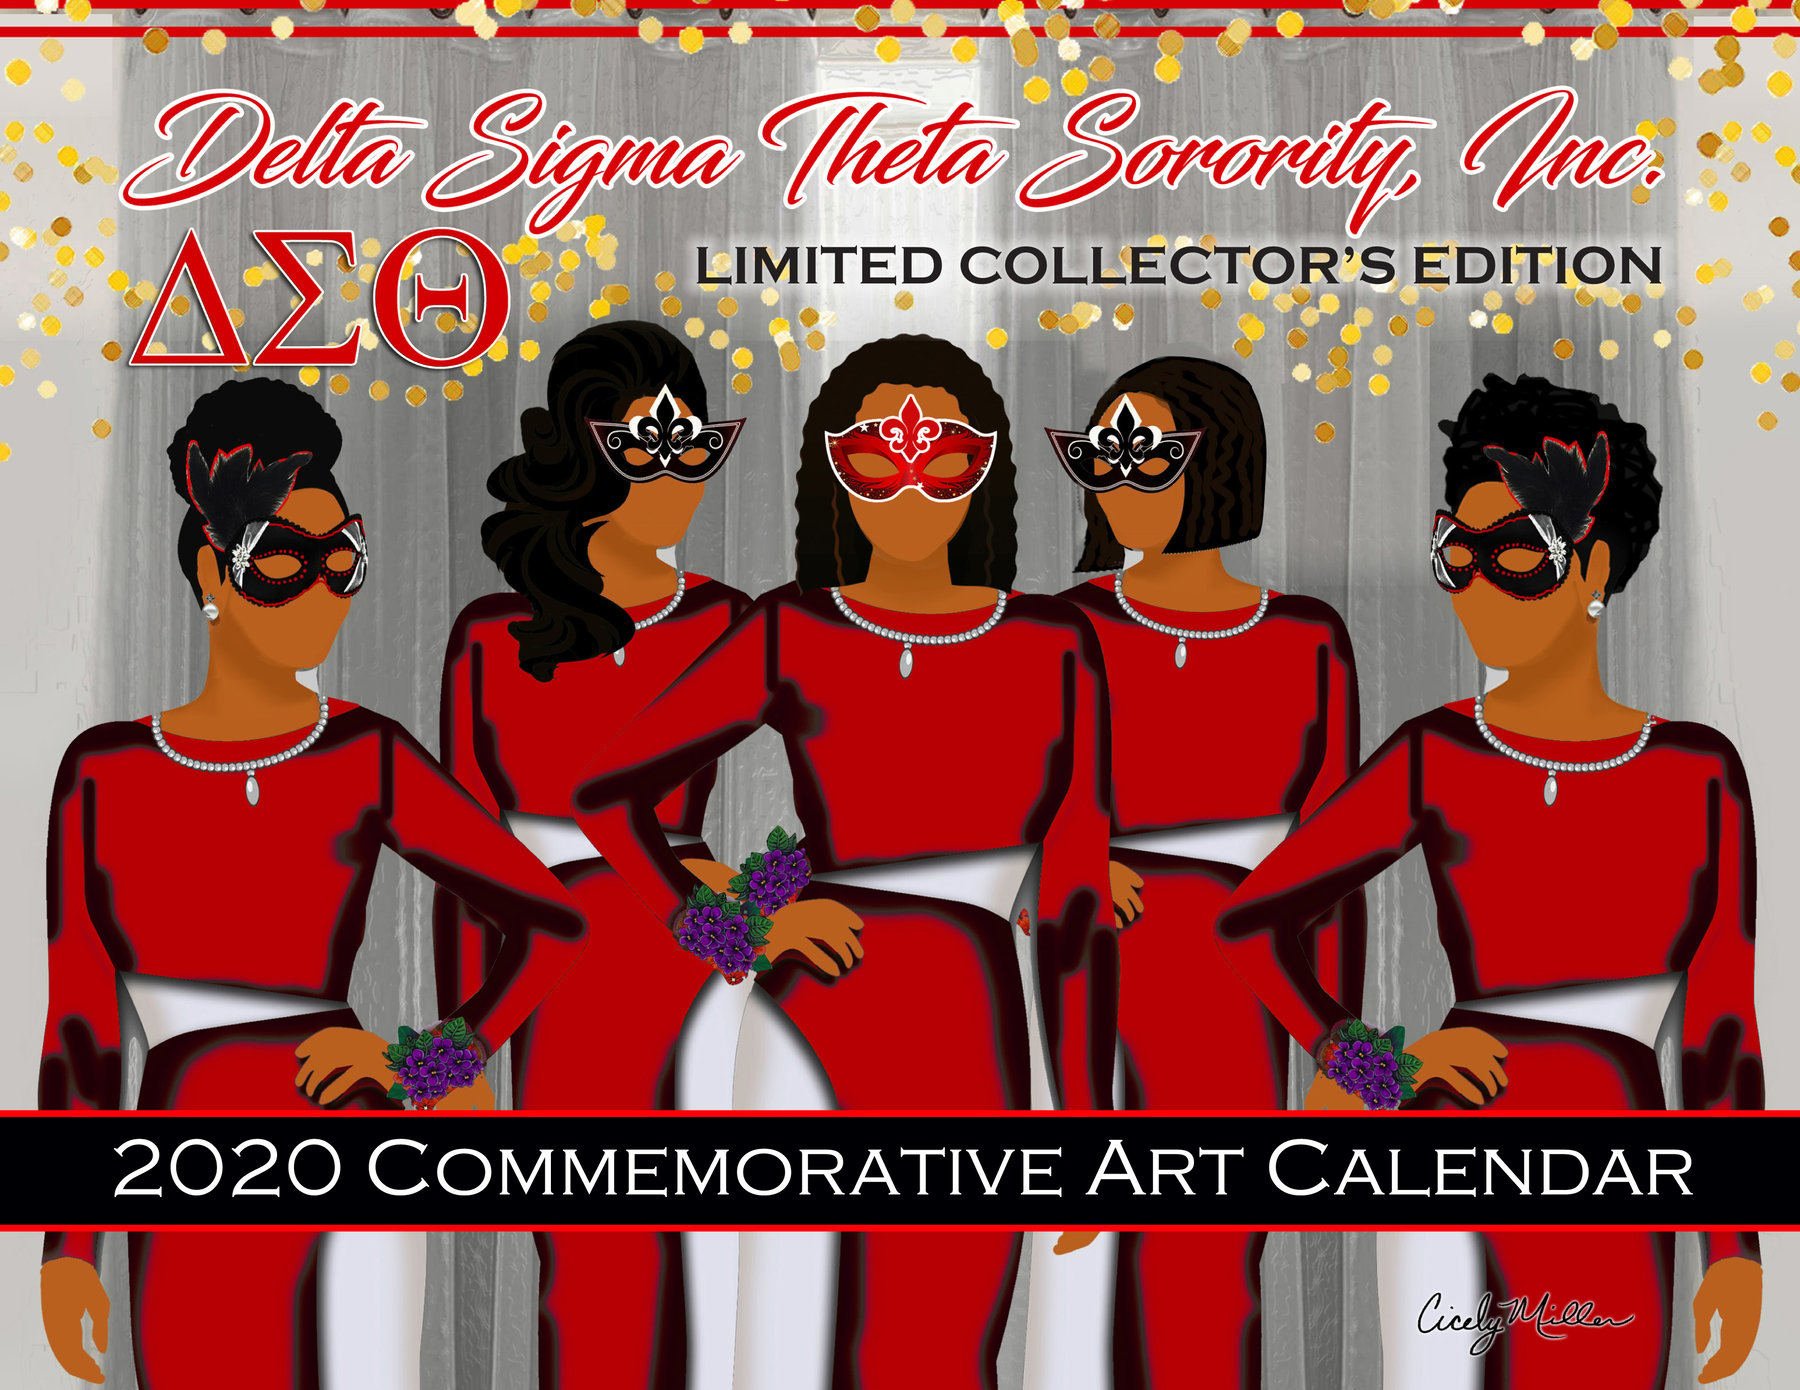 DST Art Calendar 2020 (Delta Sigma Theta Sorority, Inc. Limited Edition